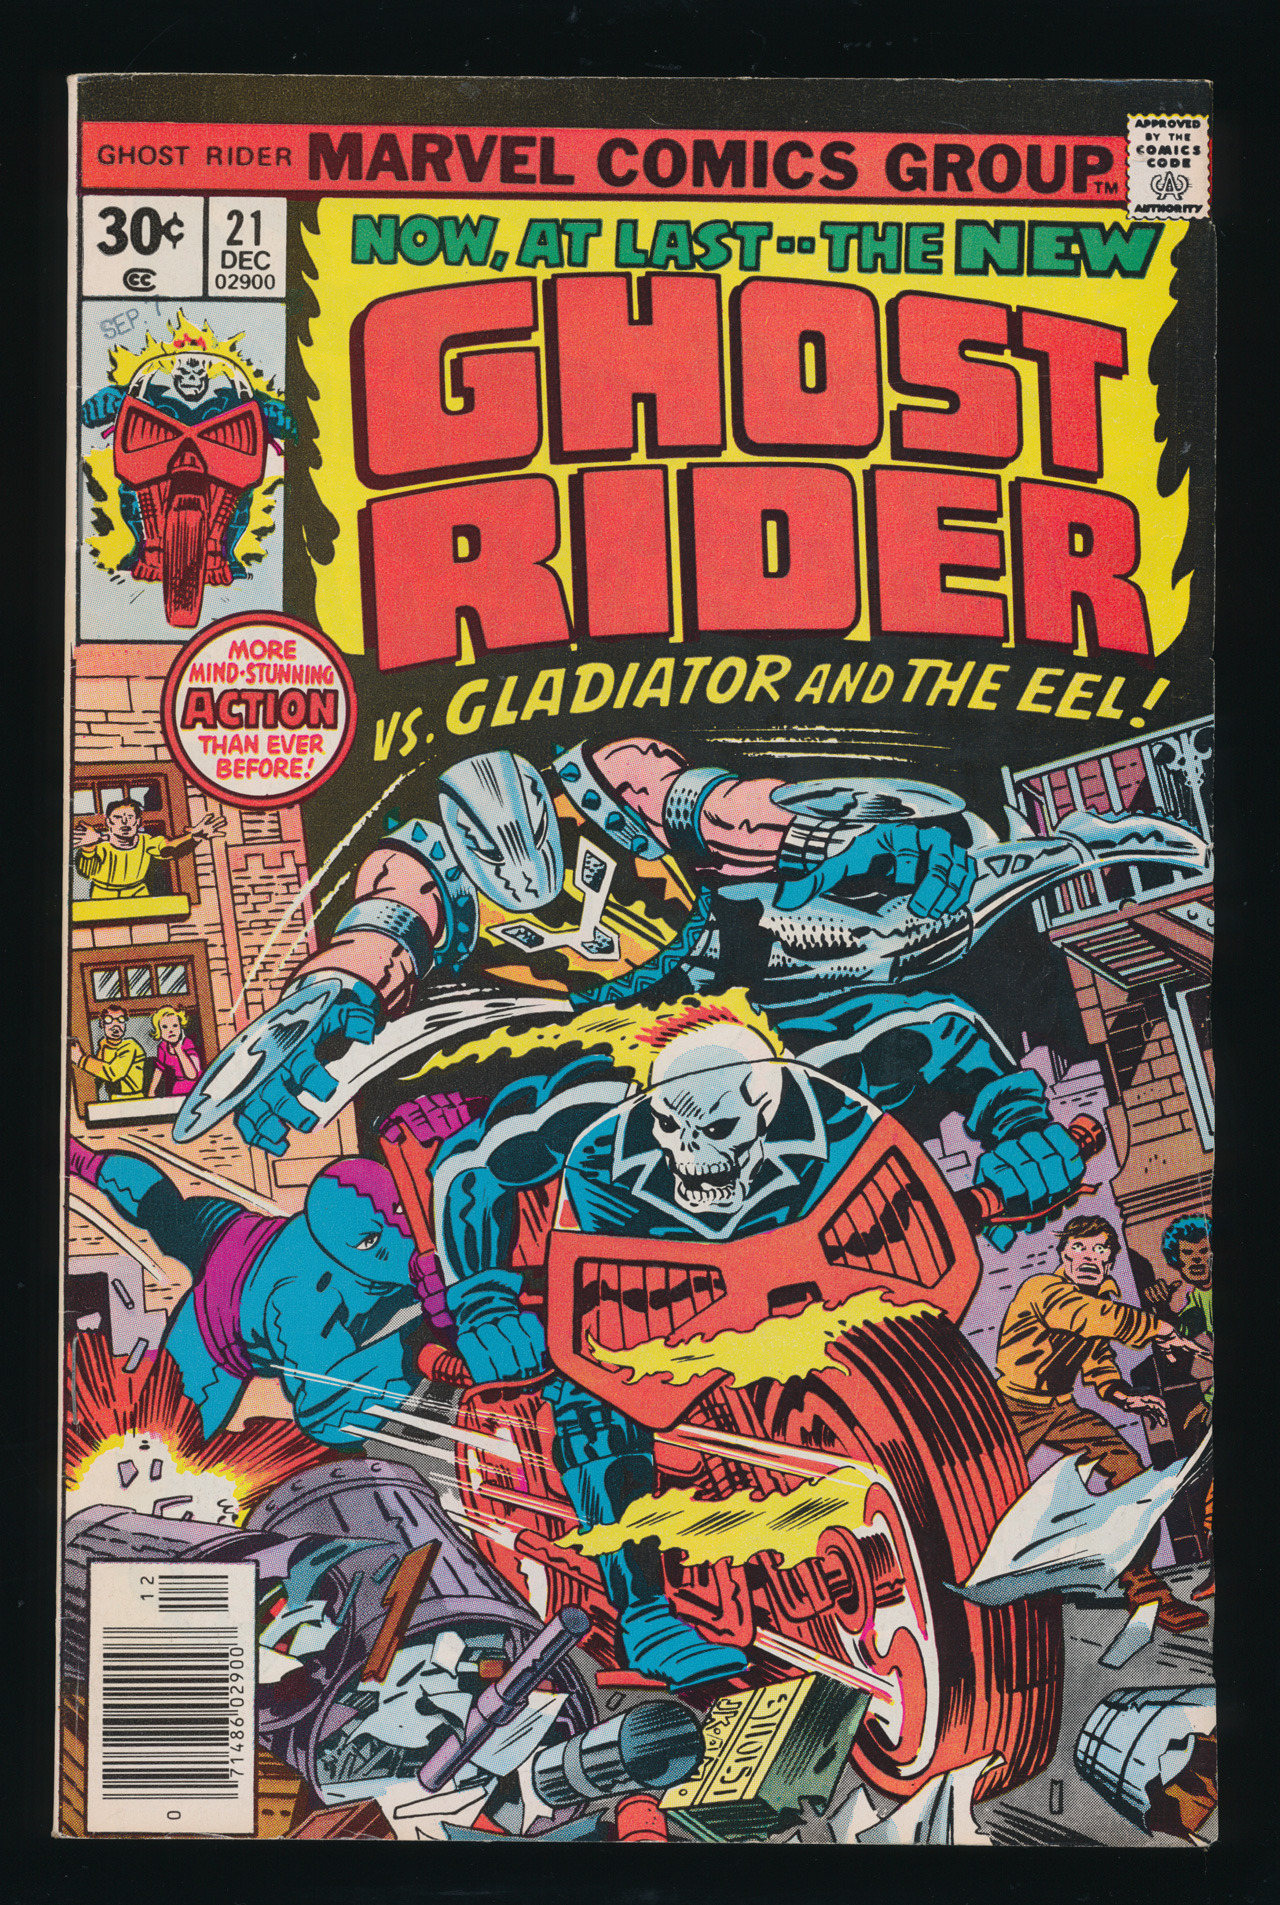 kirbycovers:
“Ghost Rider #21
(Dec. 1976)
”